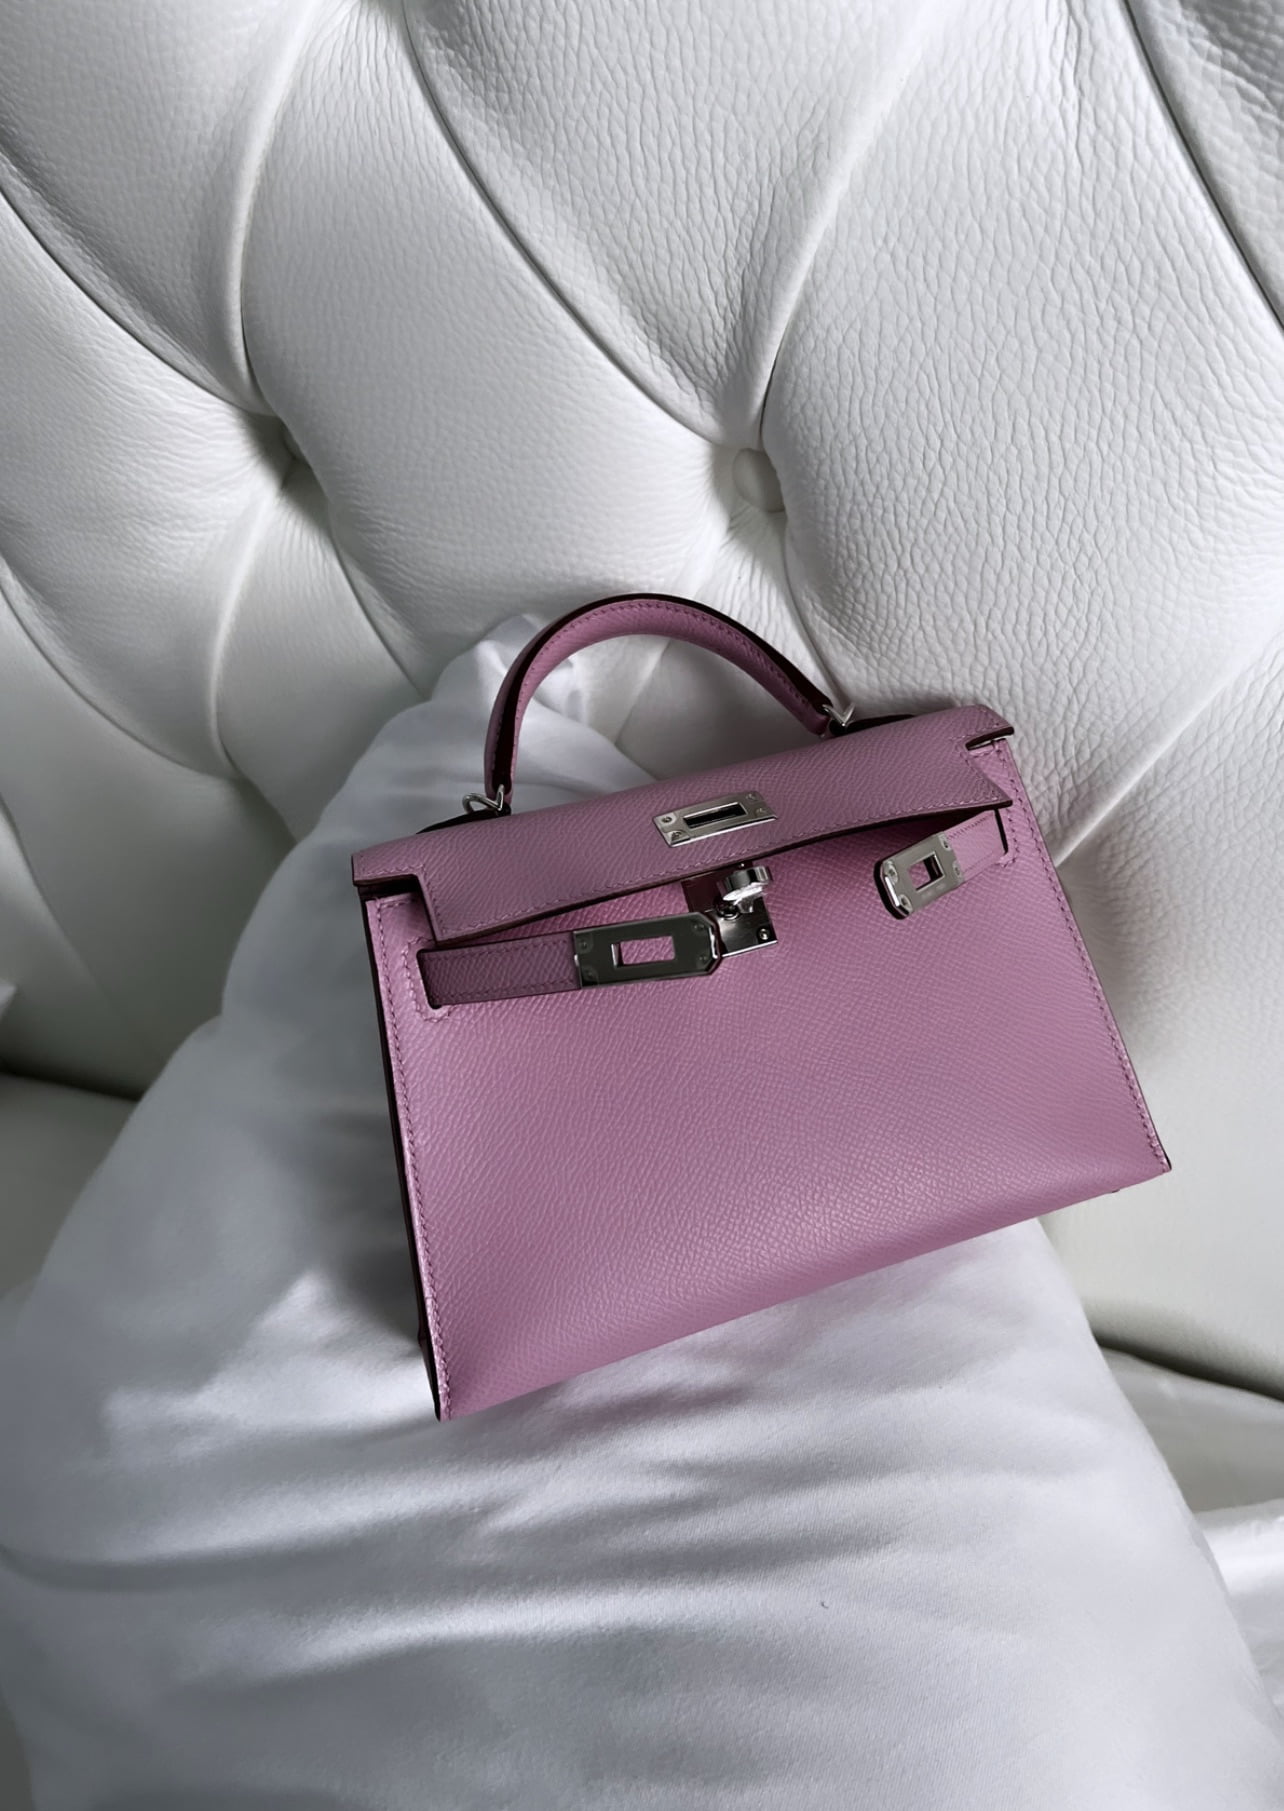 Update on Hermès Bag Prices: February 2022 - PurseBlog